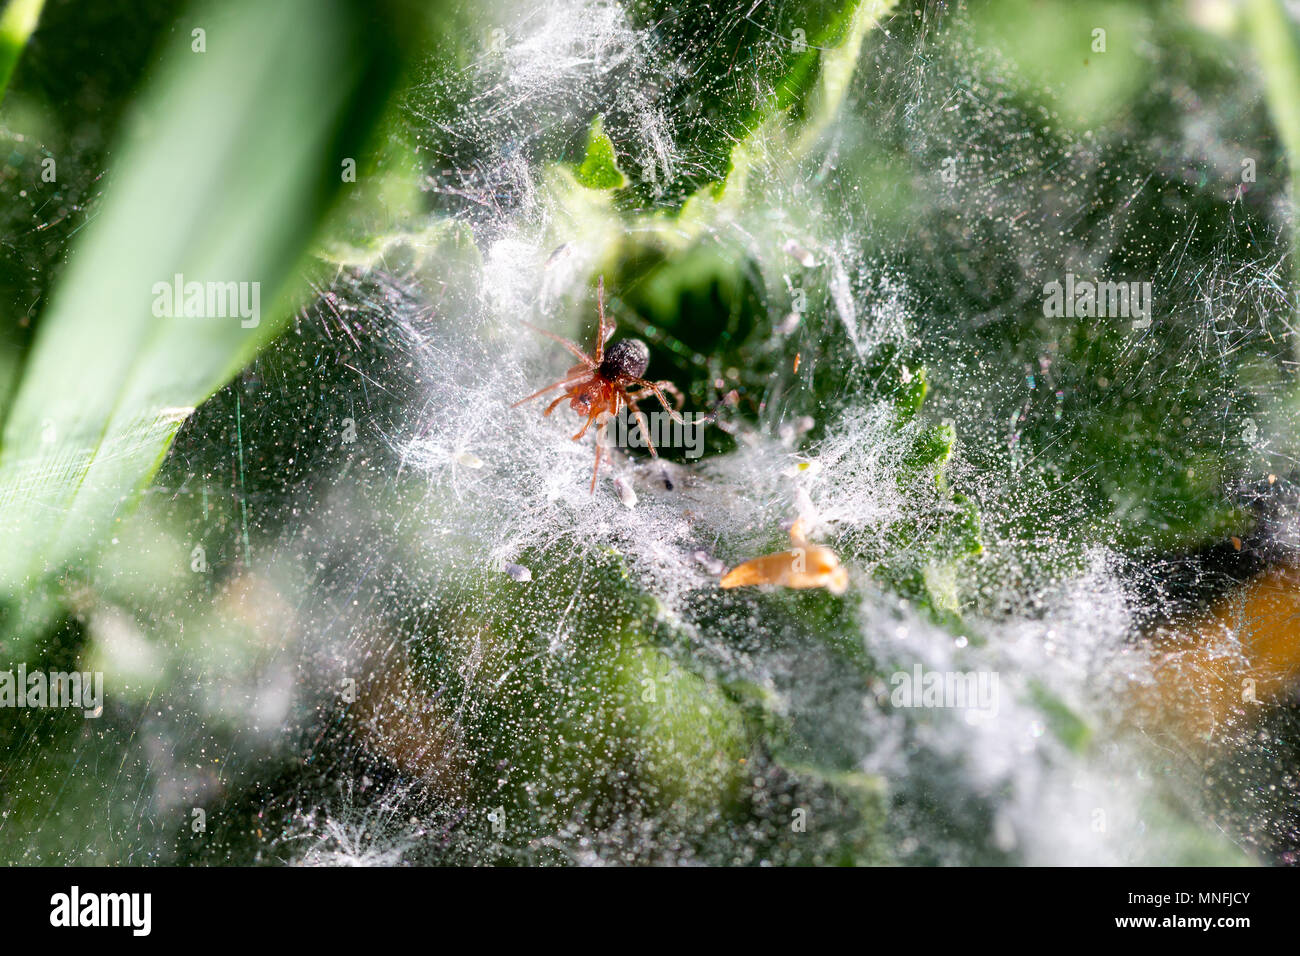 Las arañas de pasto del género de la familia Agelenidae Agelenopsis araña, conocido como embudo weaver. Macro horizontal rodada en la luz del sol de la mañana Foto de stock